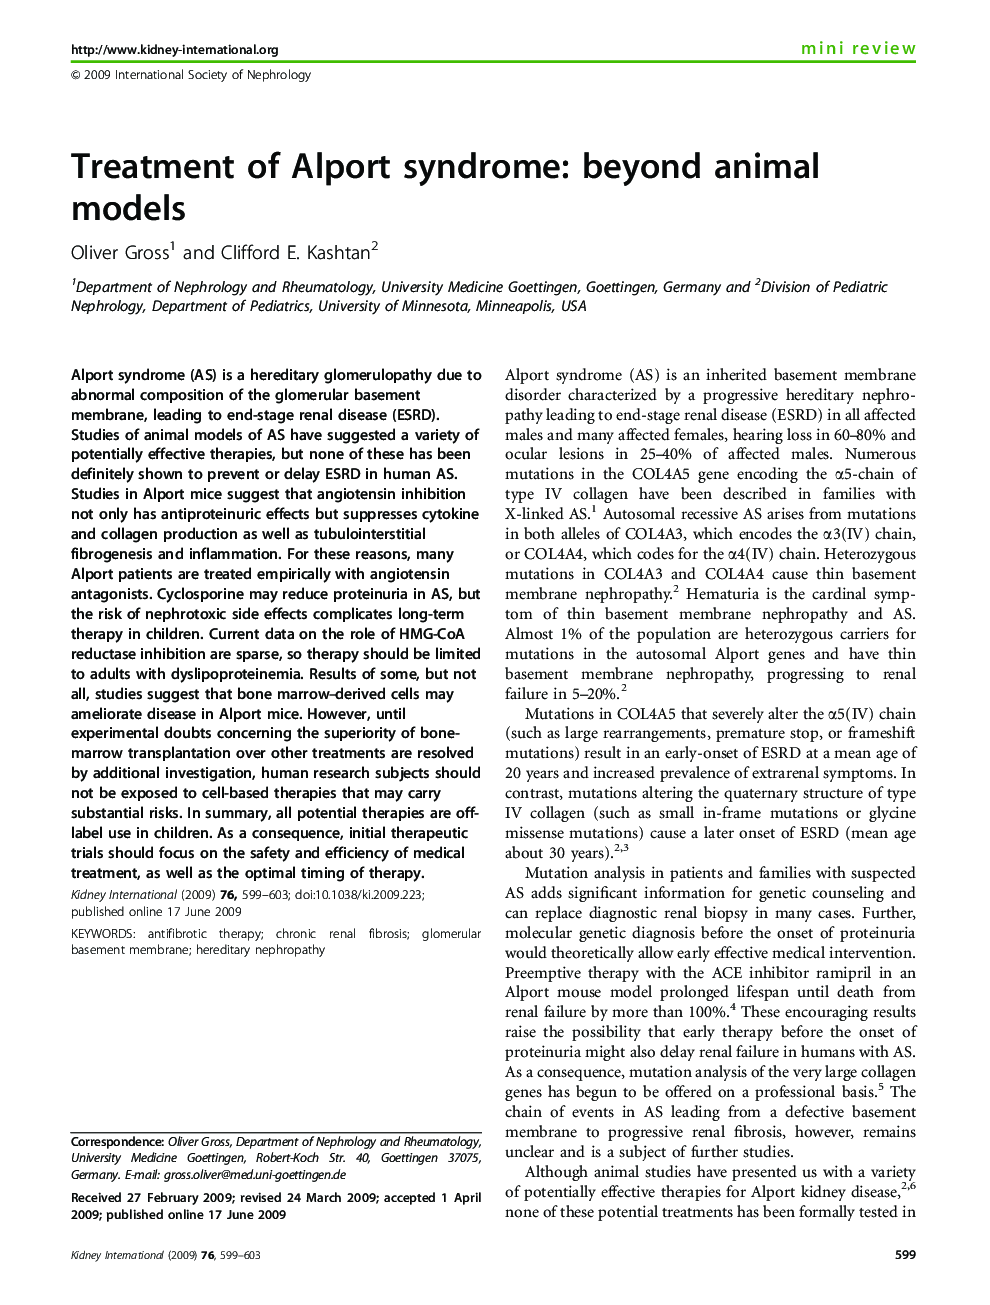 Treatment of Alport syndrome: beyond animal models